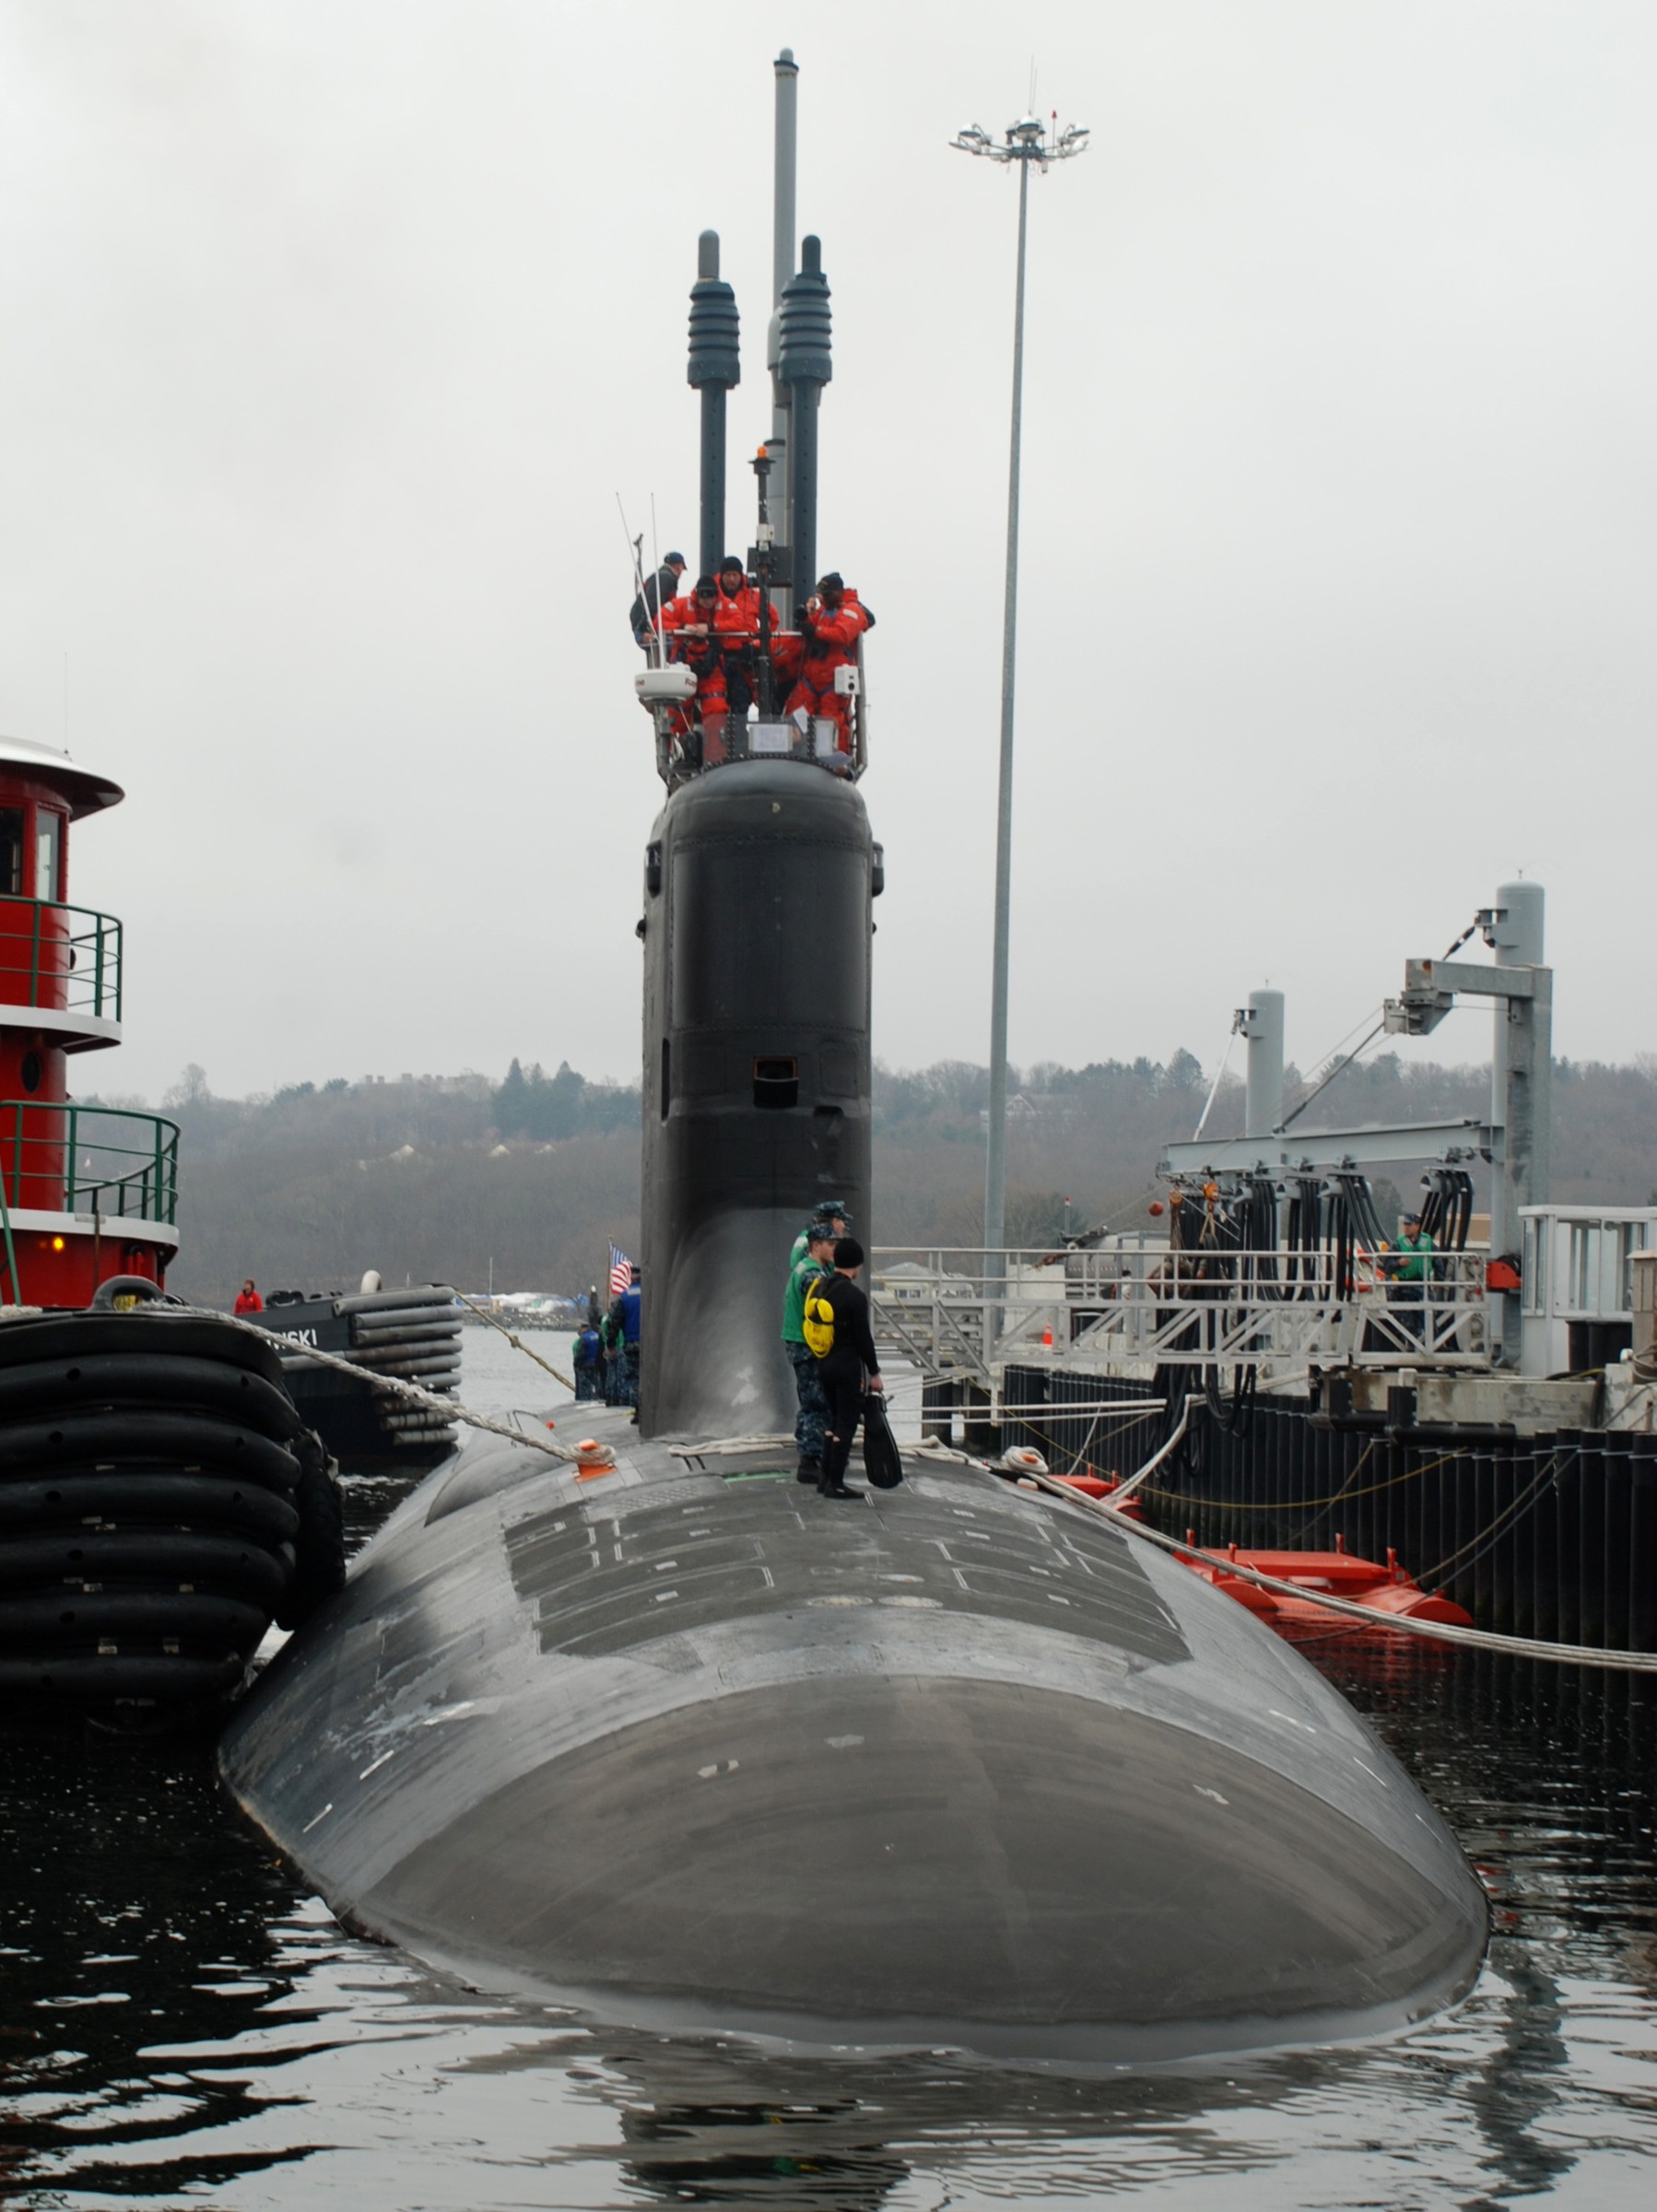 ssn-778 uss new hampshire virginia class attack submarine us navy 06 new london groton